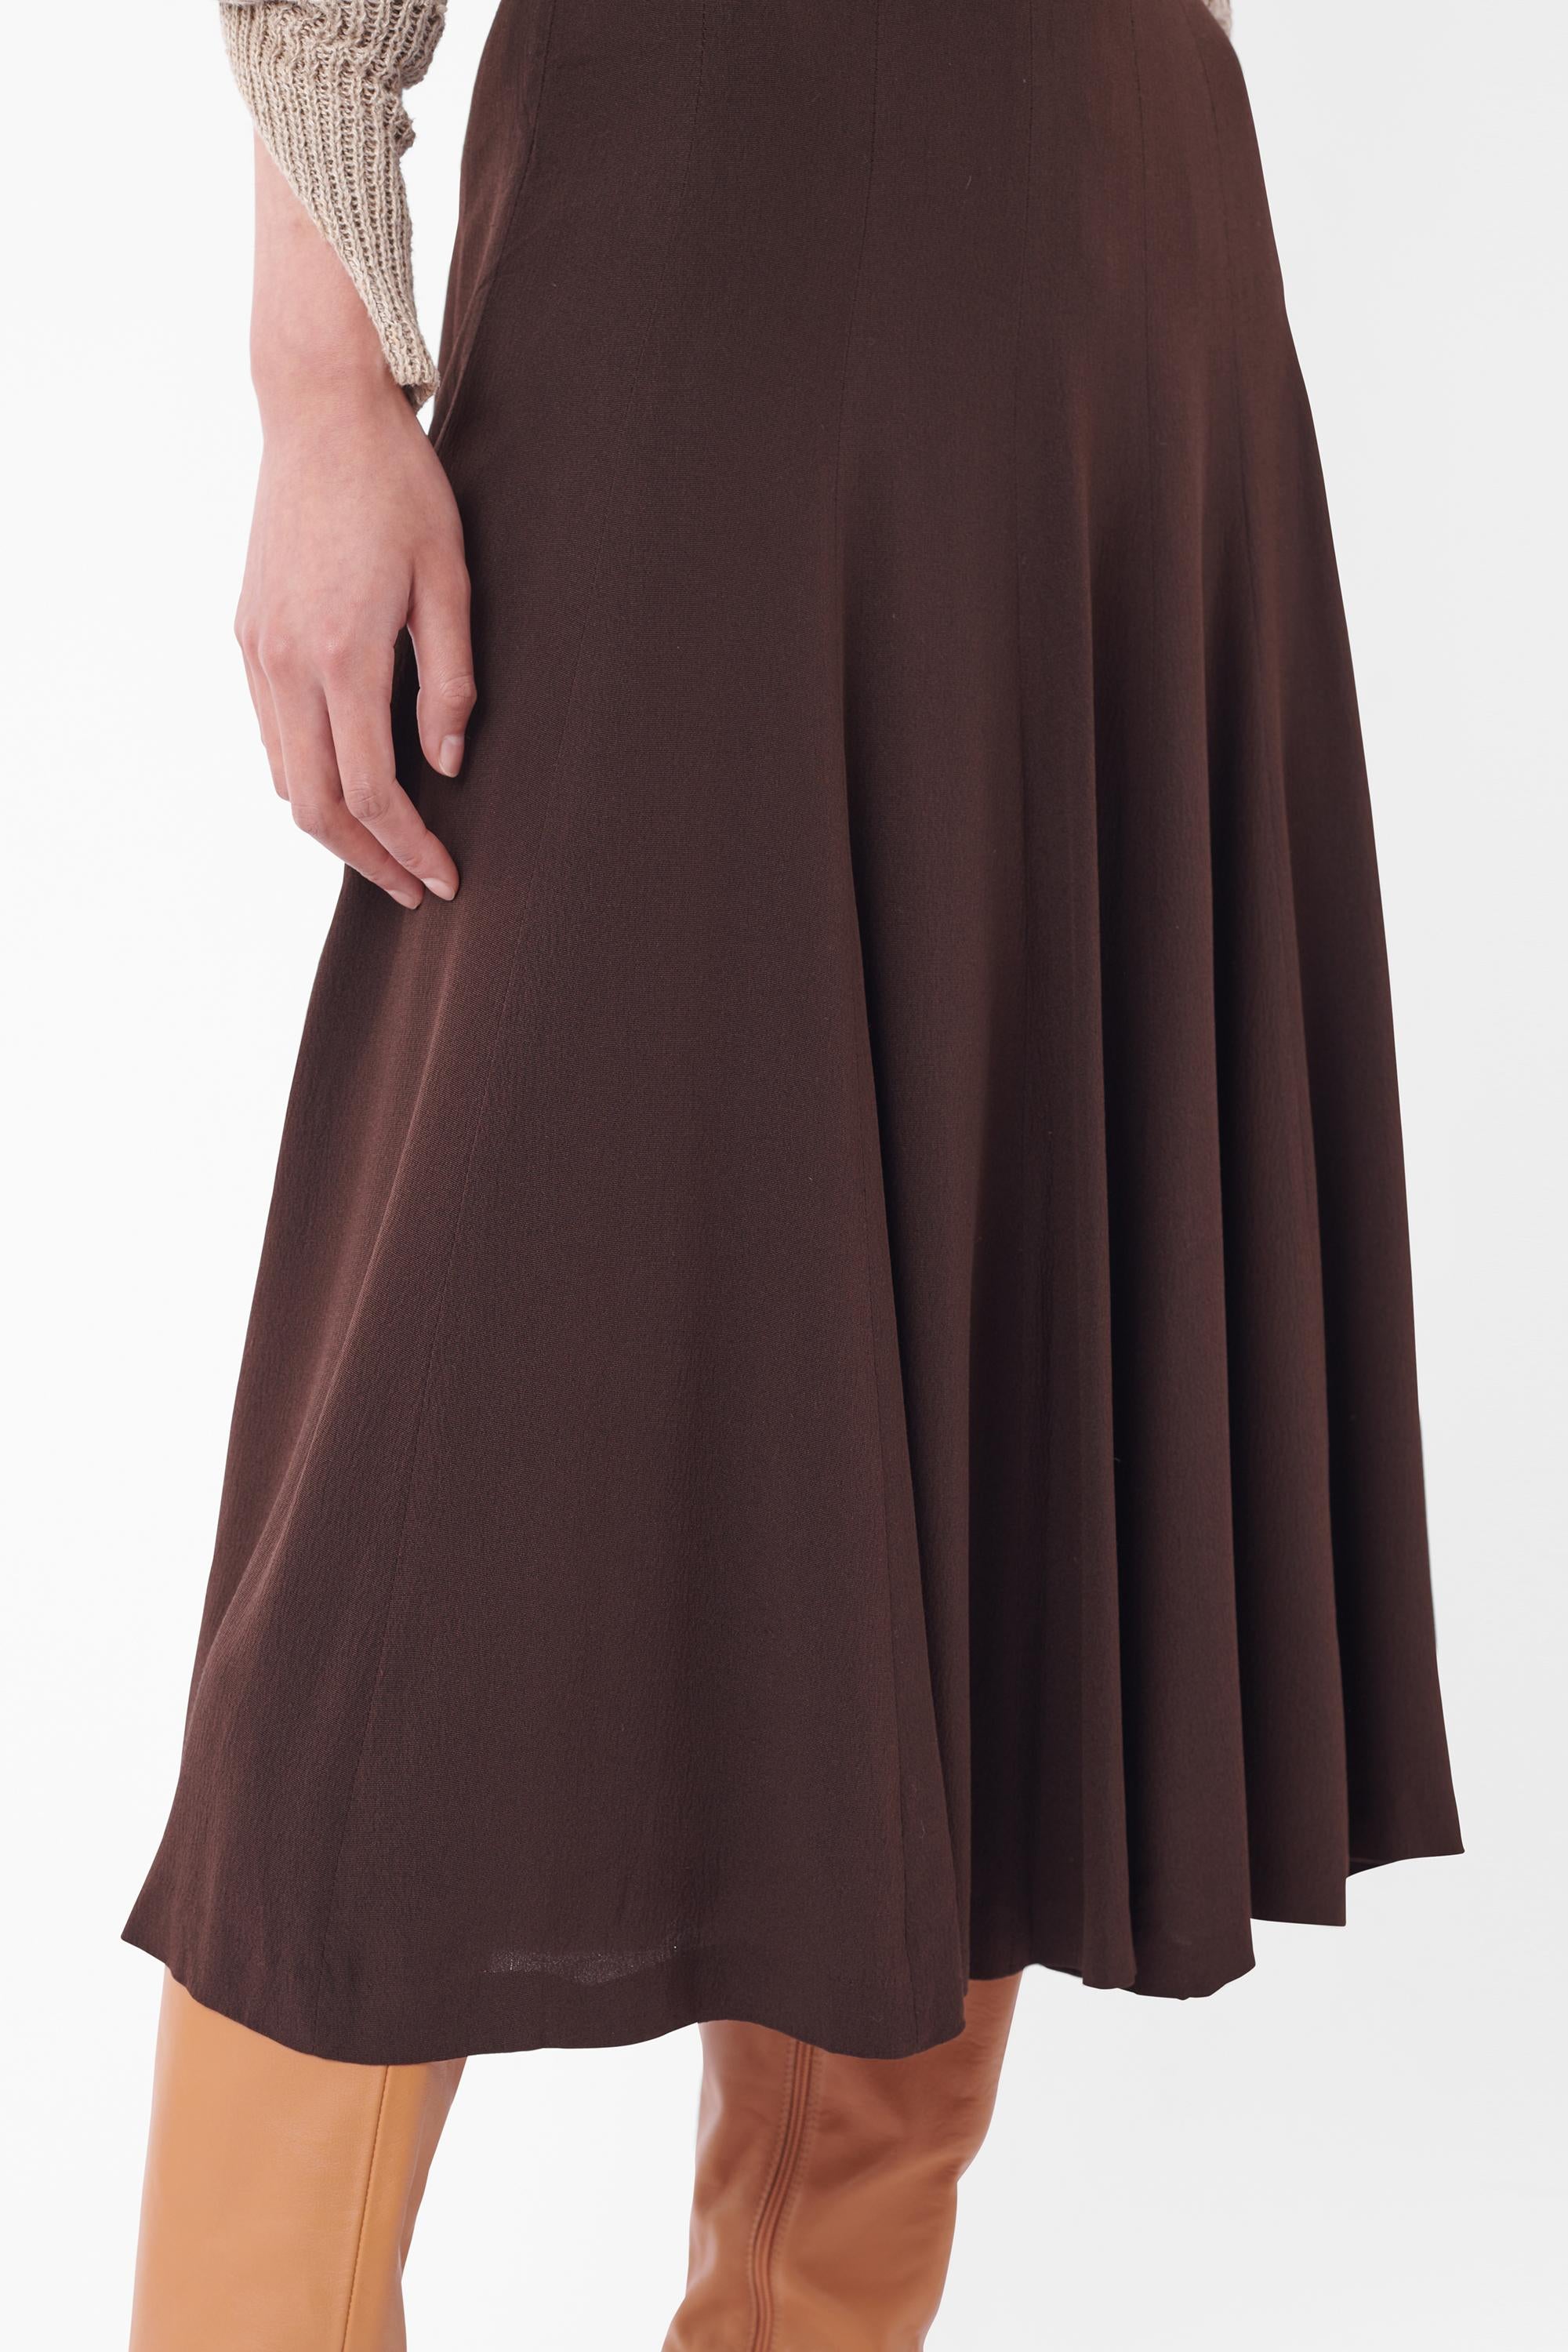 Women's Missoni Vintage 1970’s Missoni Brown Skirt For Sale